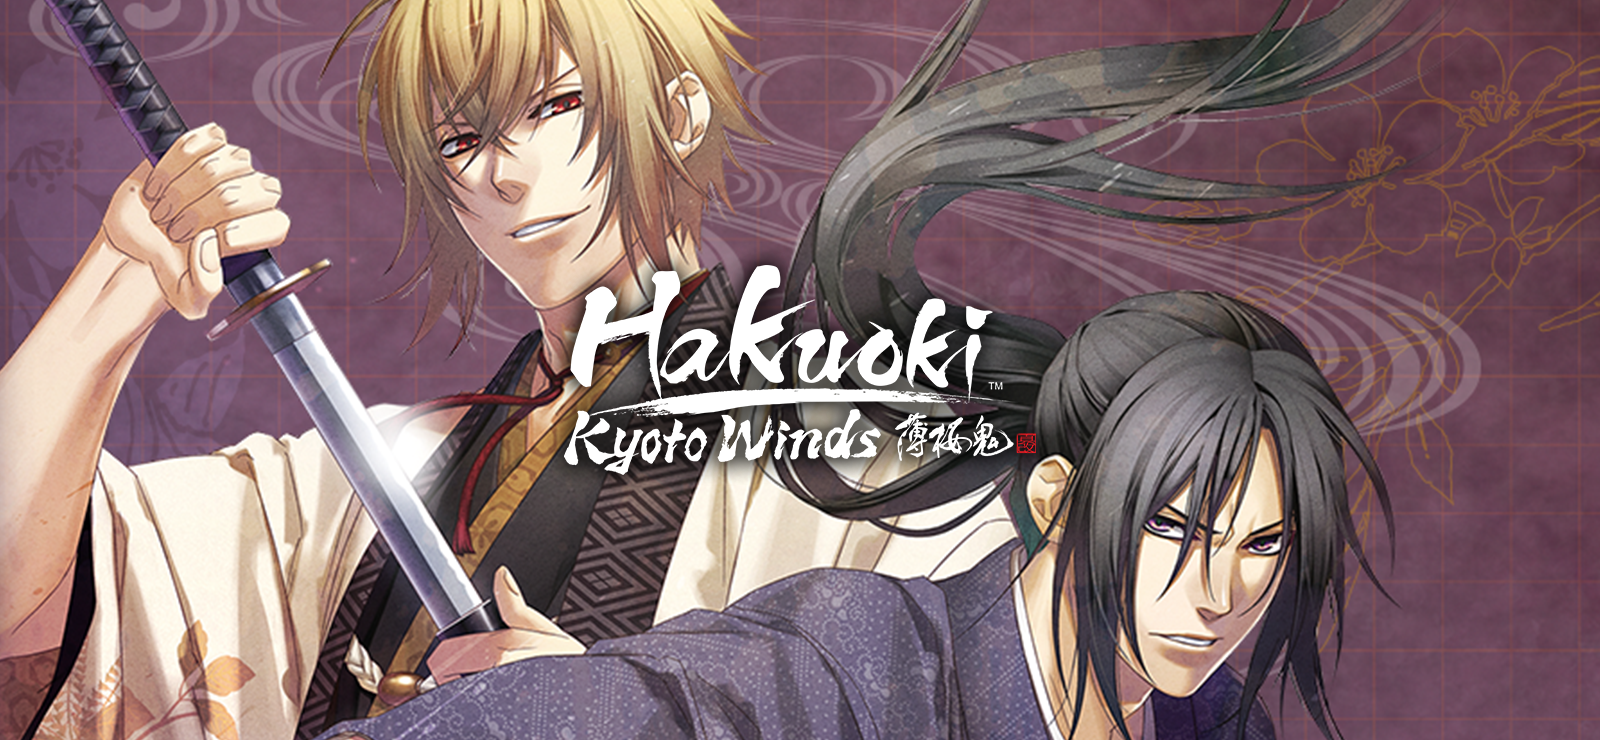 Hakuoki: Kyoto Winds Complete Deluxe Set